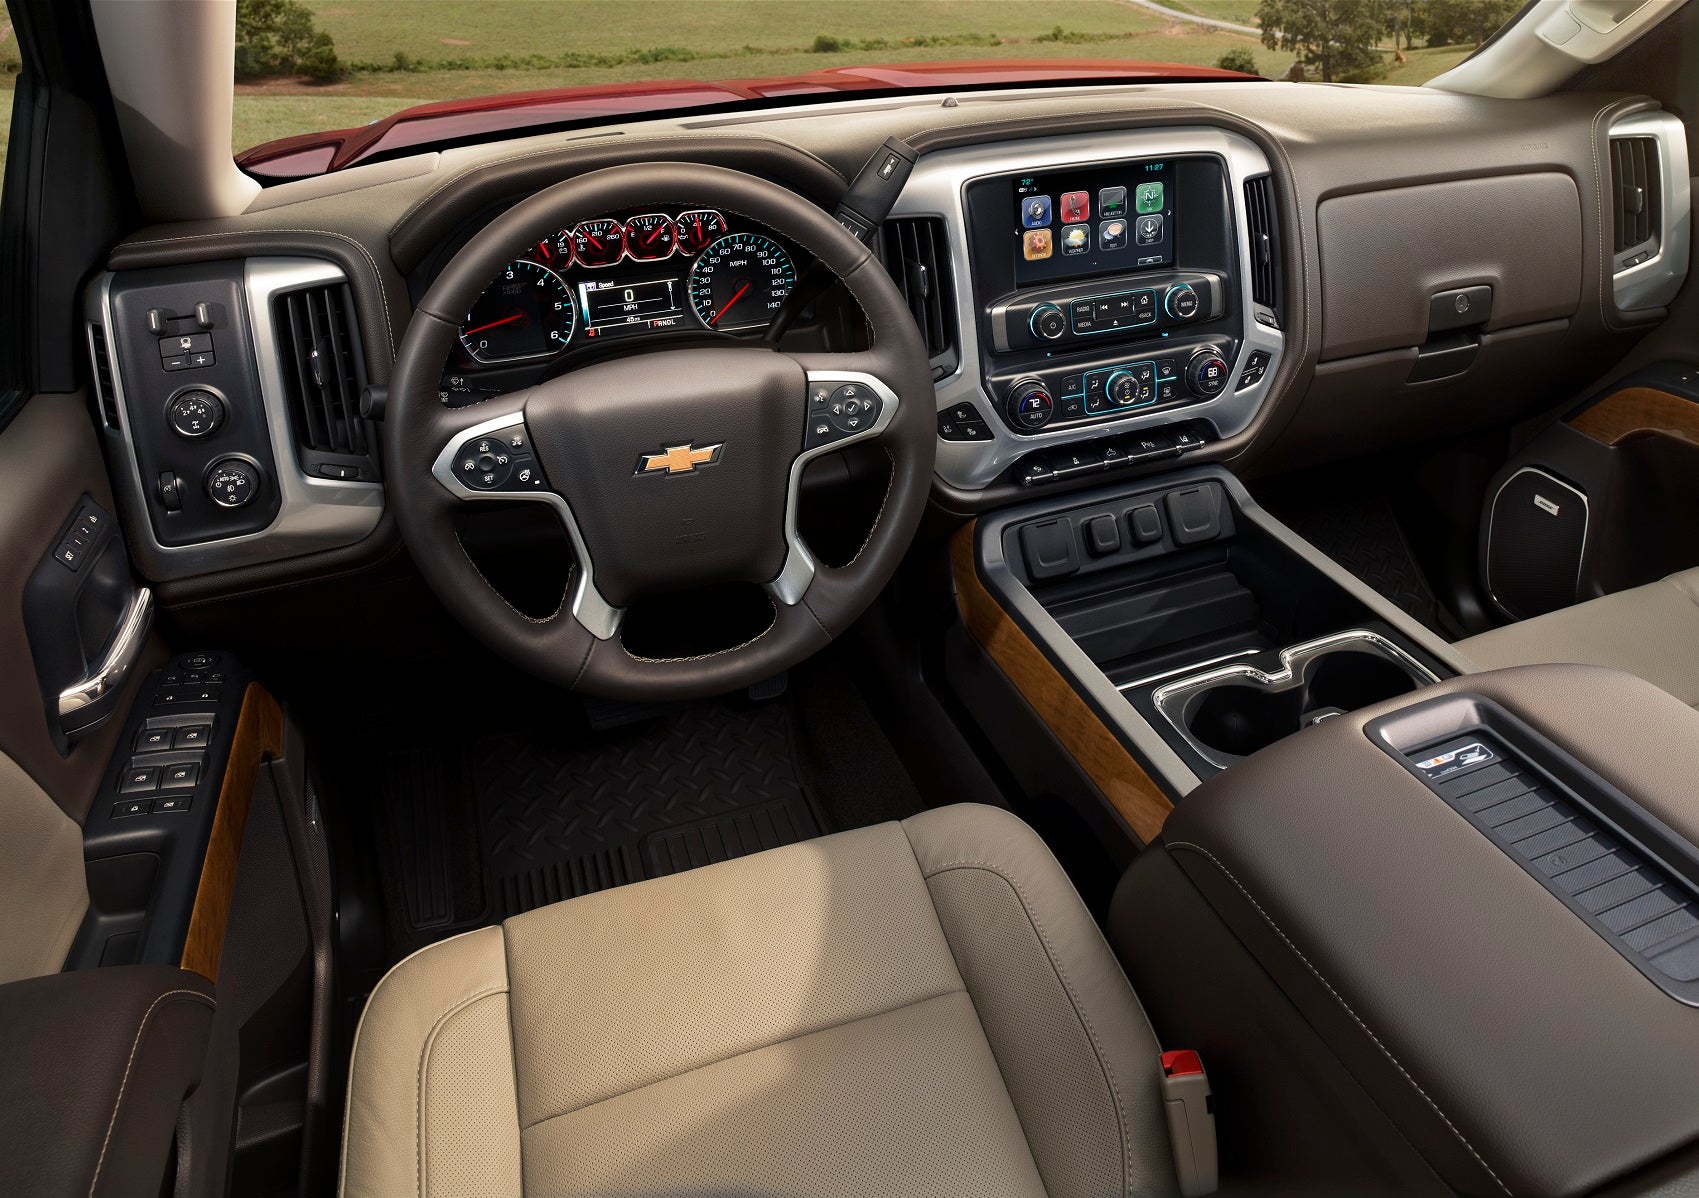 2019 Chevy Silverado 2500 beige leather interior and dashboard